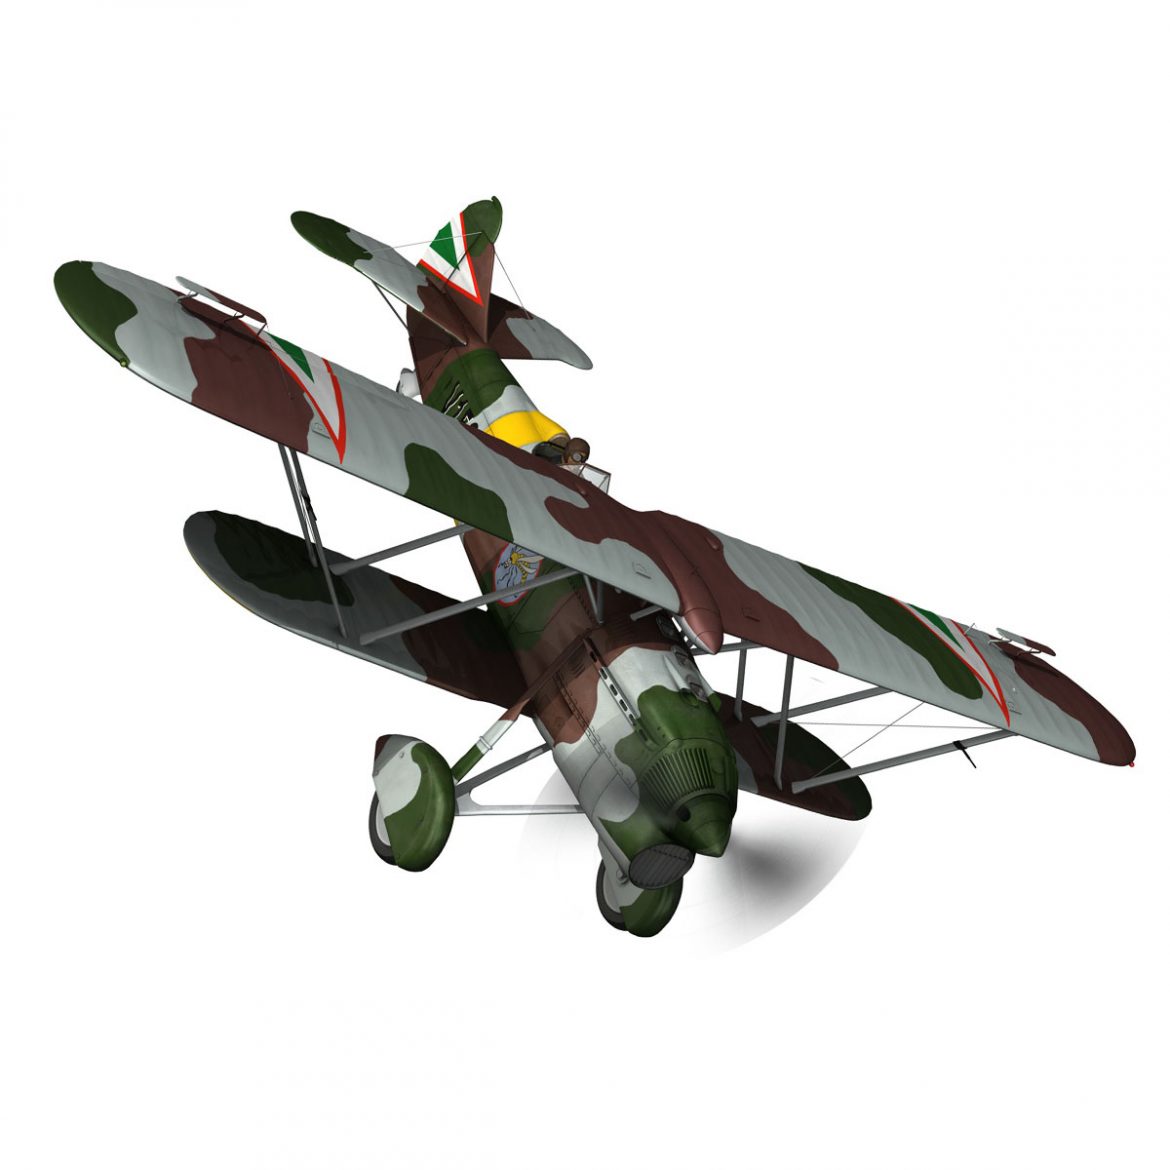 fiat cr.32 – hungarian royal air force – v159 3d model fbx c4d lwo obj 299963